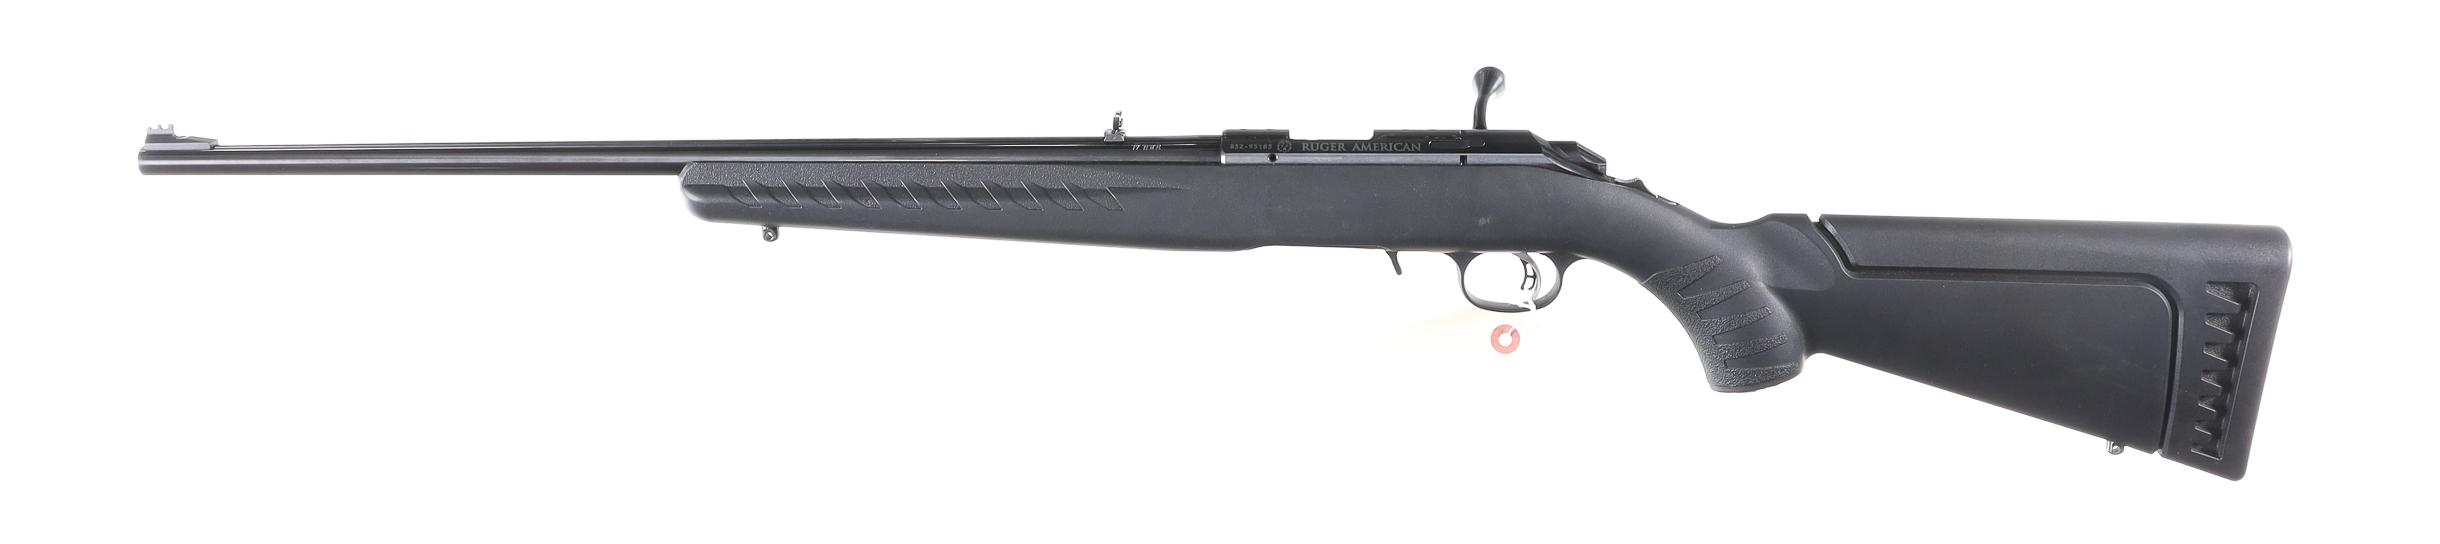 Ruger American Bolt Rifle .17 hmr